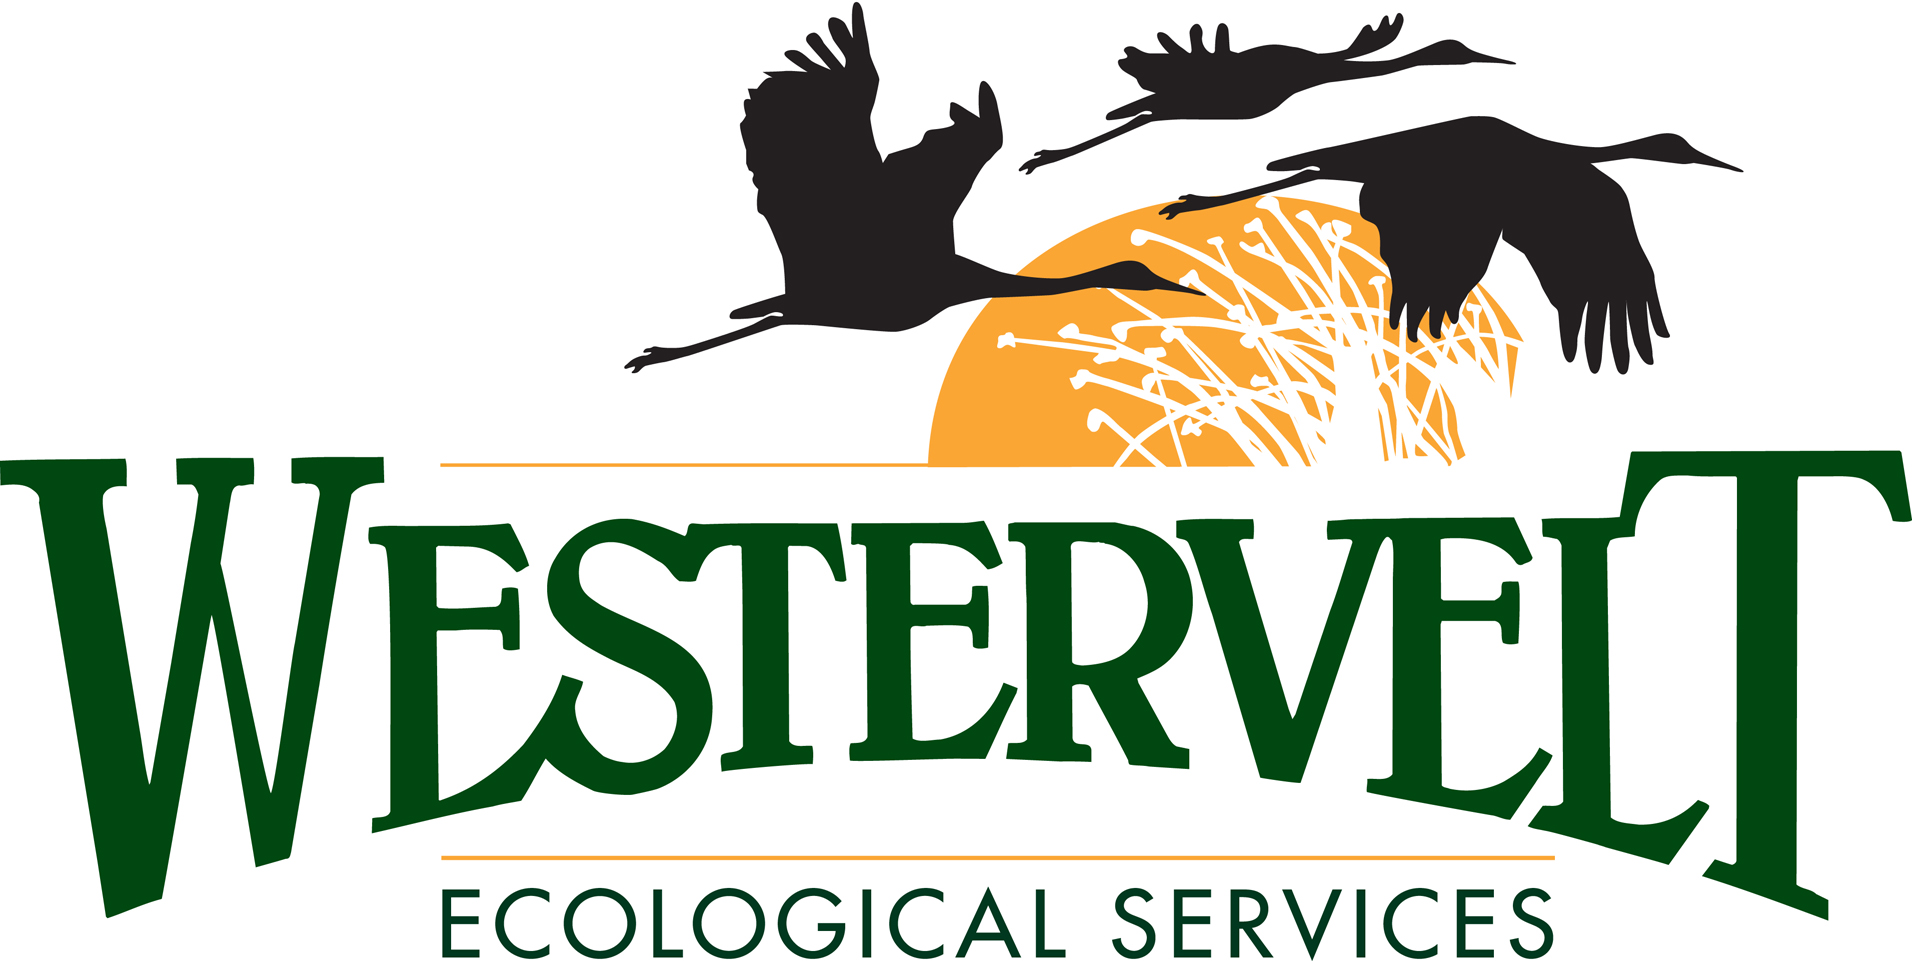 Westervelt logo